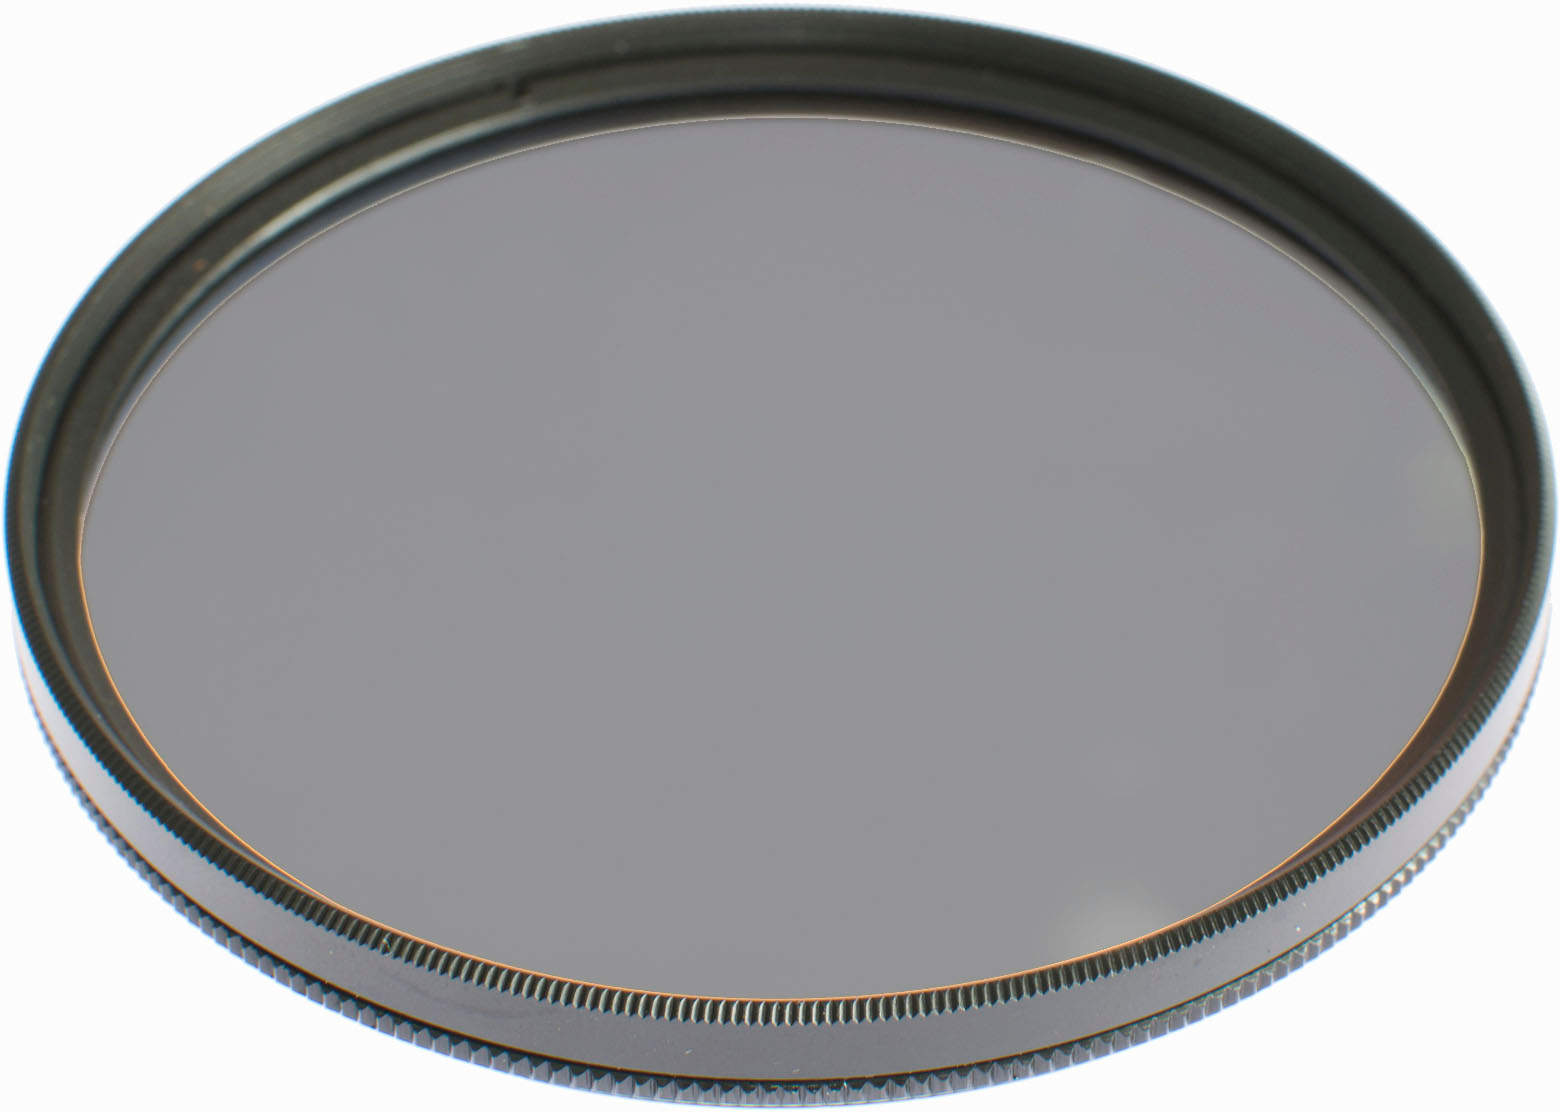 Angle View: Sunpak - Circle 67mm Polarizer Lens Filter